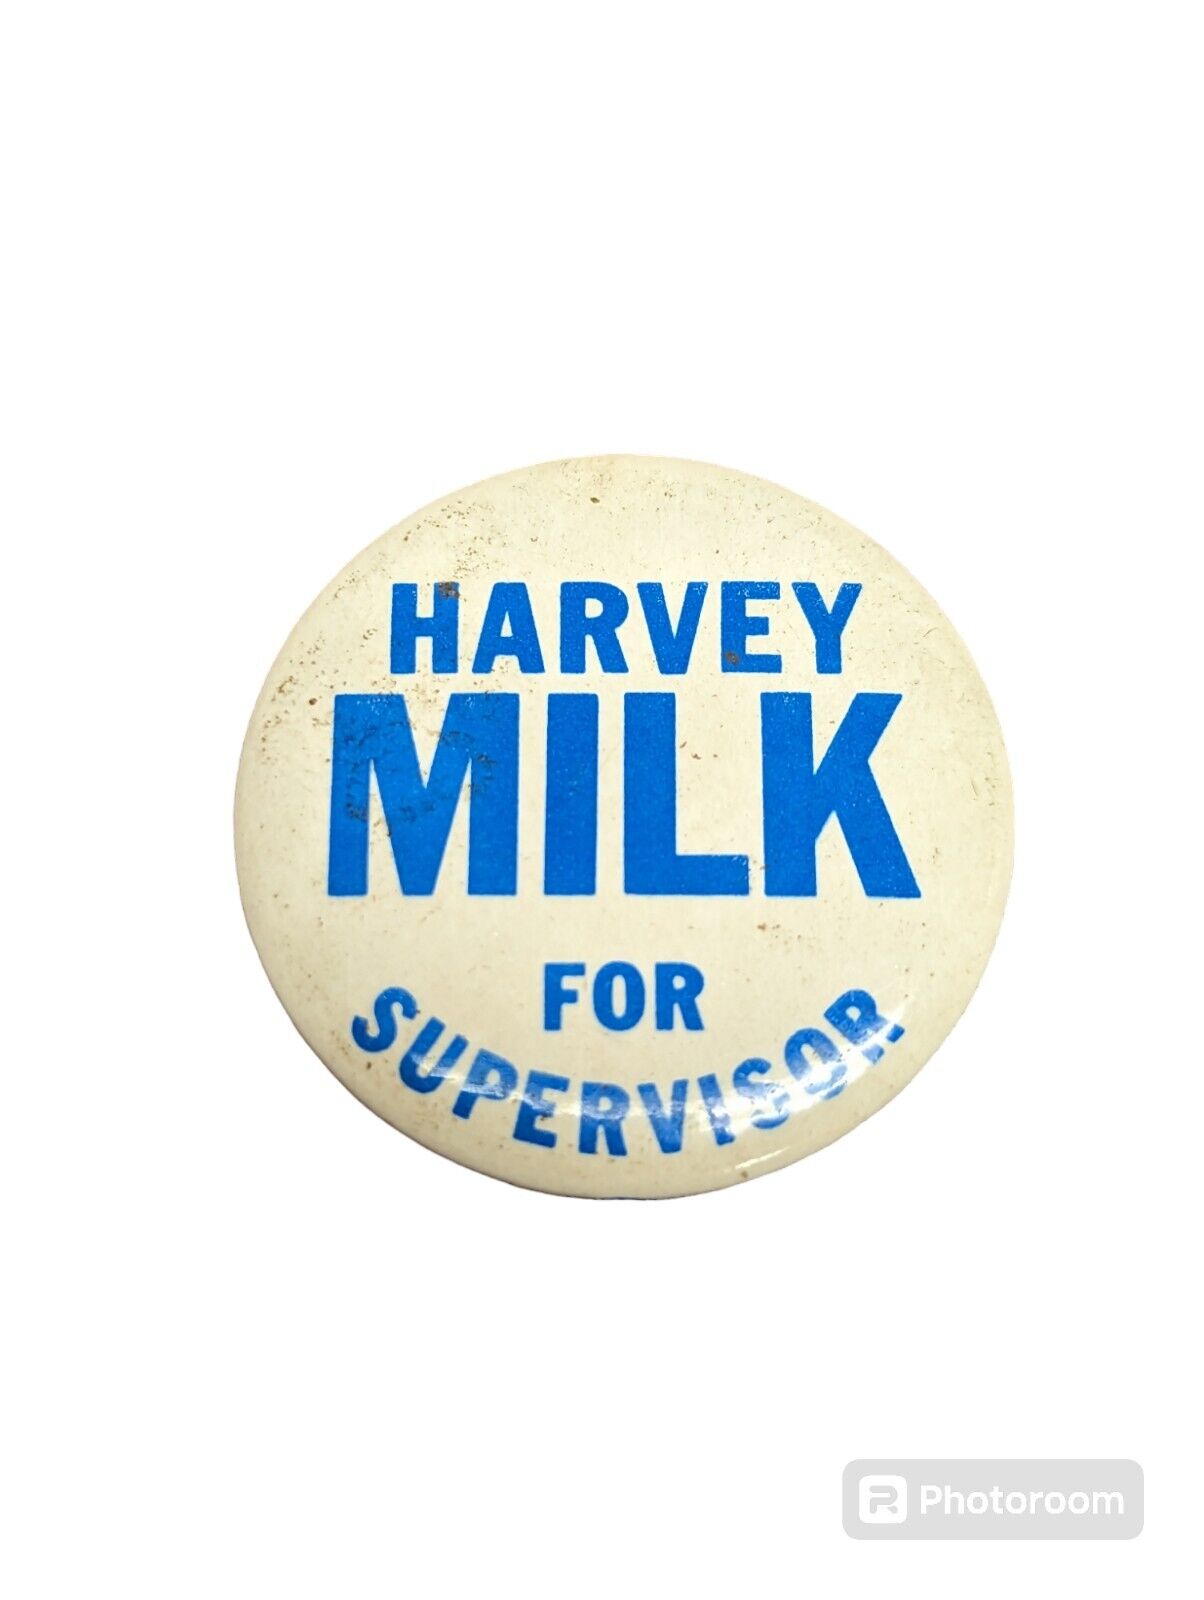 HARVEY MILK for SUPERVISOR vintage CAMPAIGN BUTTON San Francisco Election LGBTQ